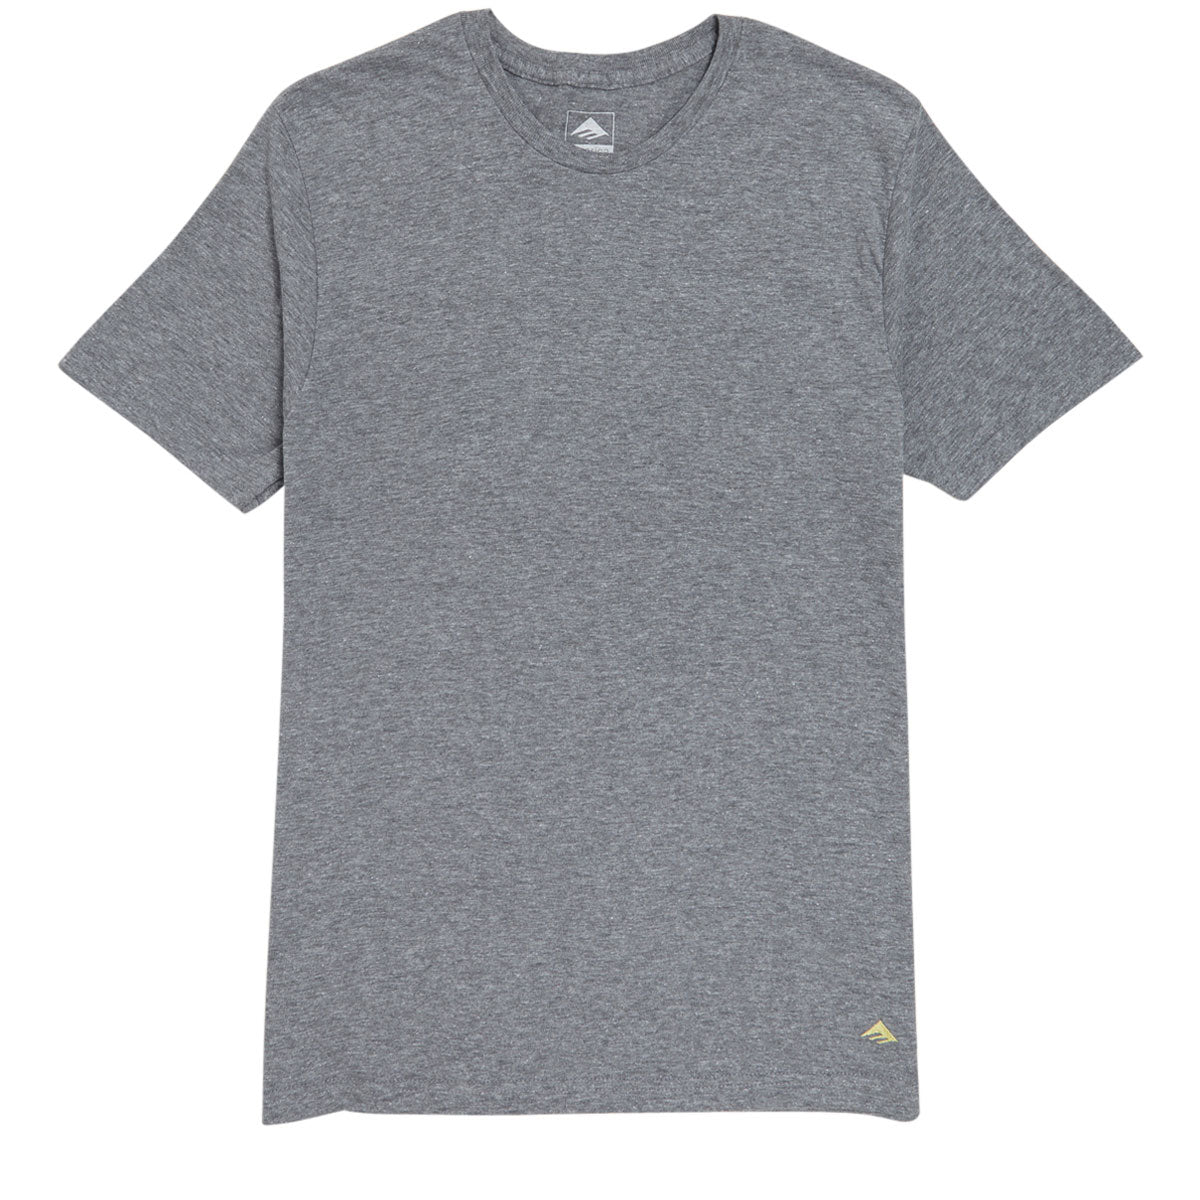 Emerica Micro Triangle T-Shirt - Charcoal/Heather image 1